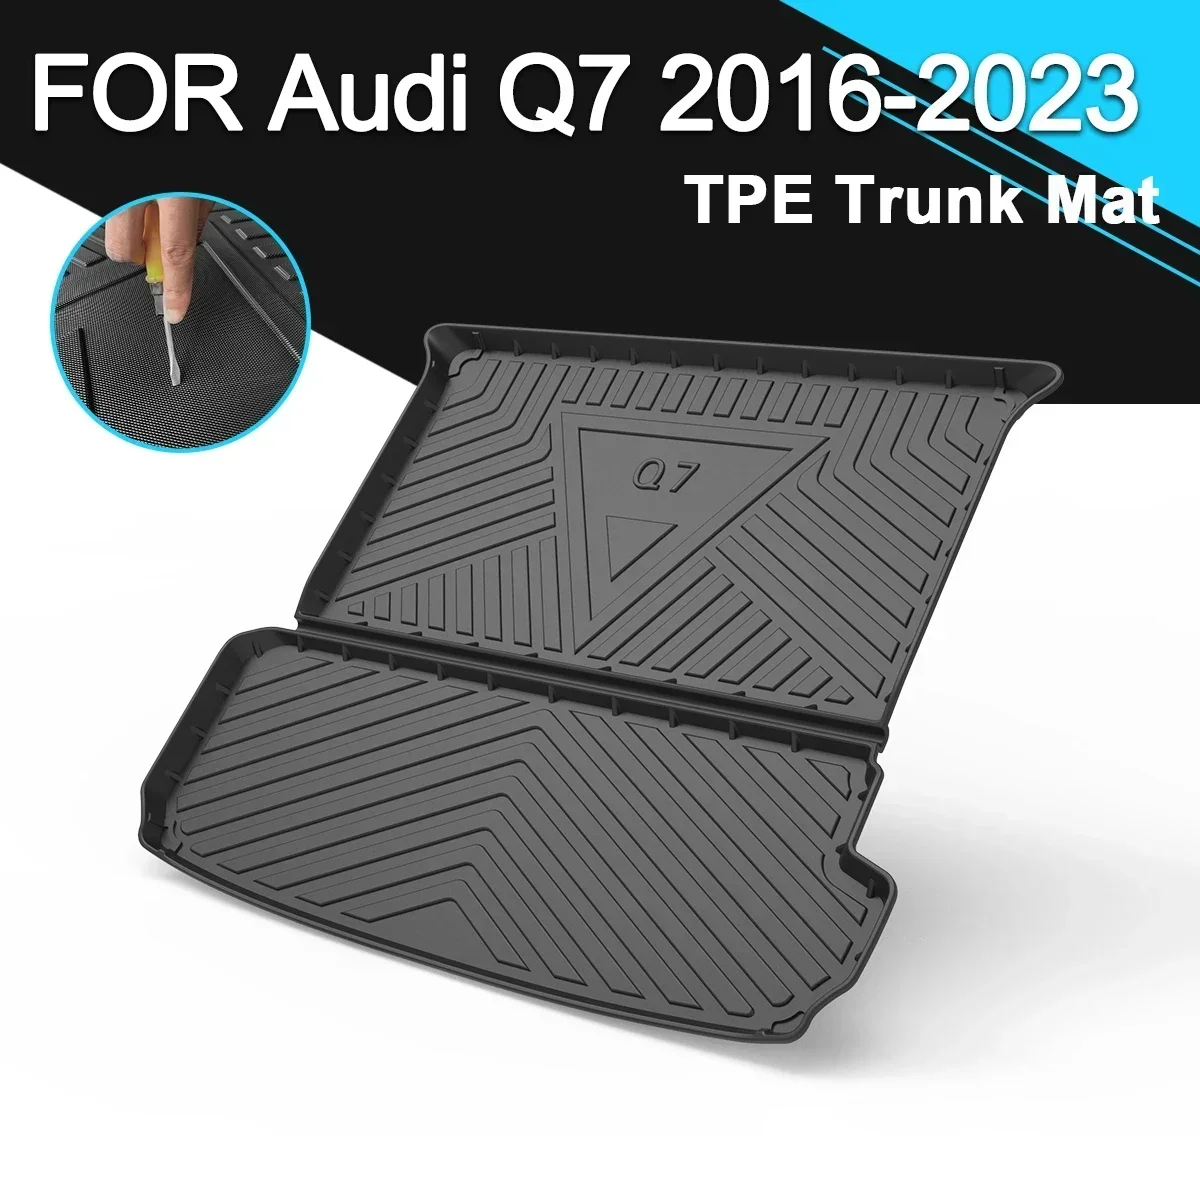 

Car Rear Trunk Cover Mat TPE Waterproof Non-Slip Rubber Cargo Liner Auto Accessories For Audi Q7 2016-2023